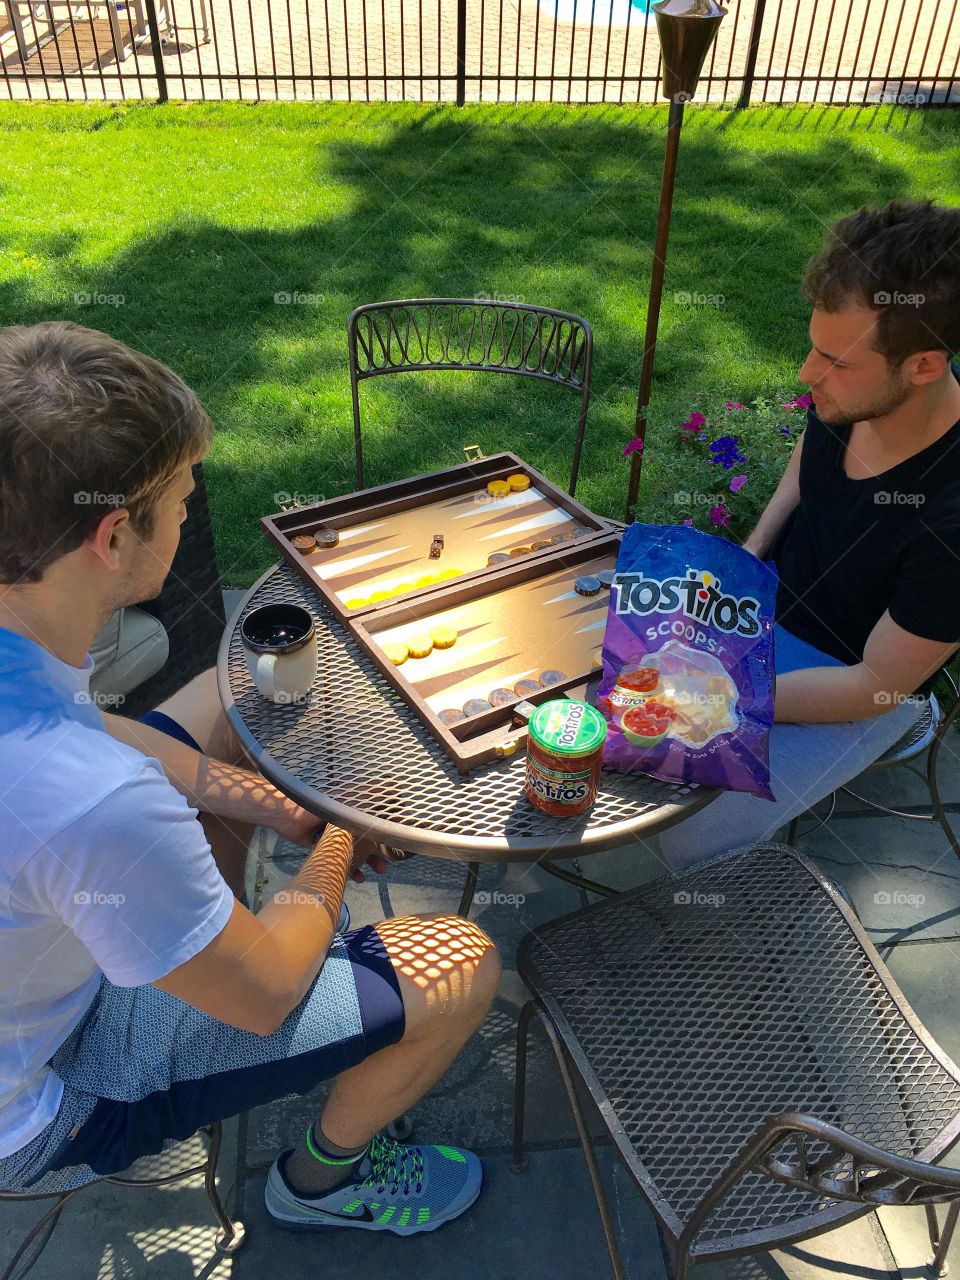 Two man playing backgammon in garden